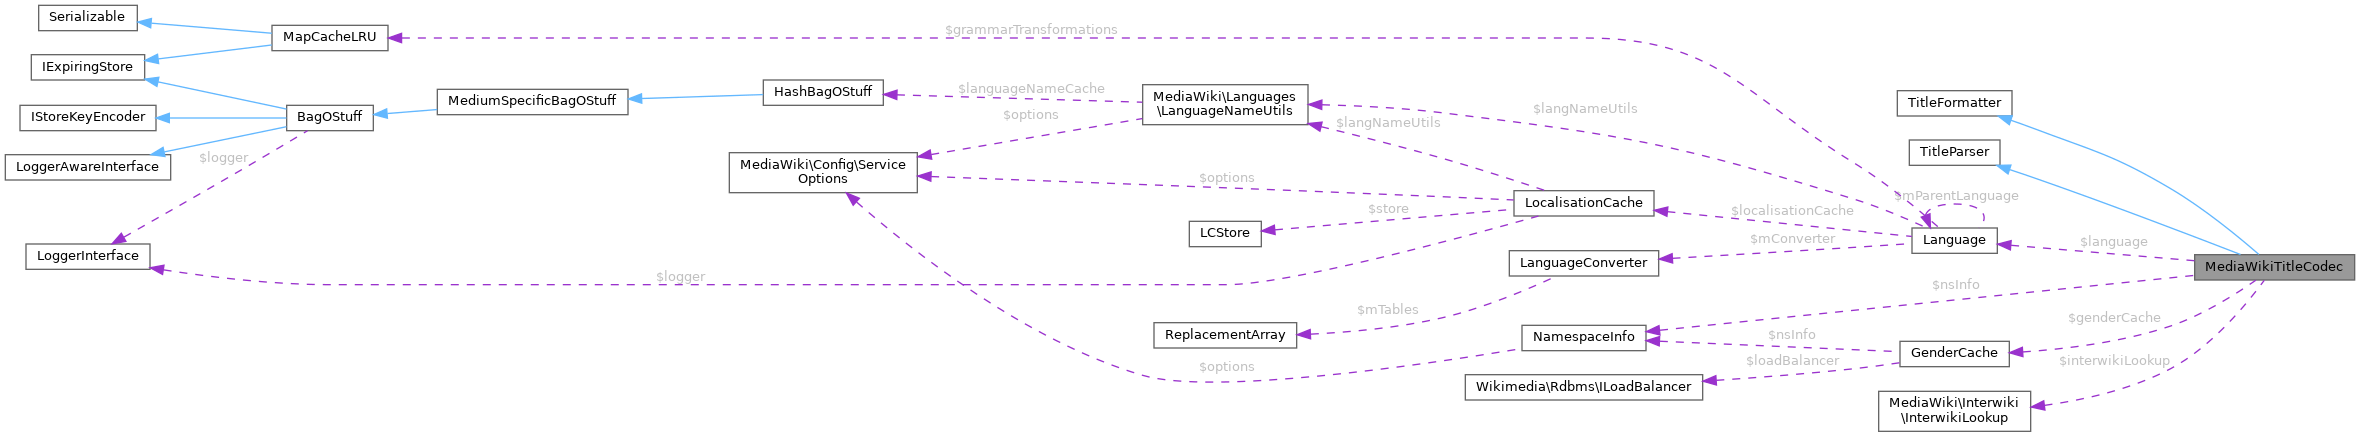 mediawiki parser functions